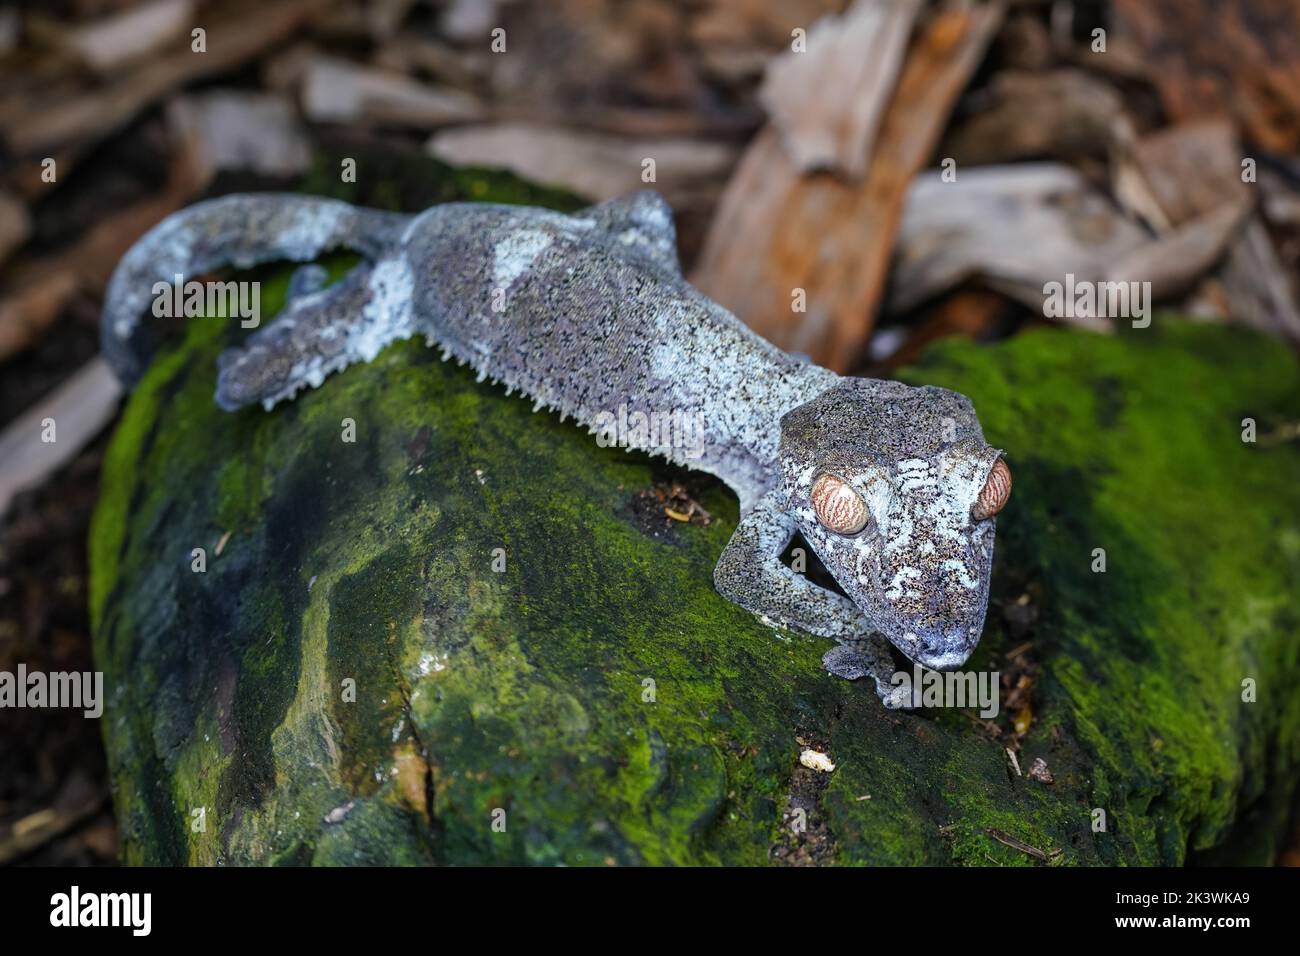 Satanic giant leaf-tailed gecko - Uroplatus fimbriatus - resting on moss covered rock, closeup detail Stock Photo